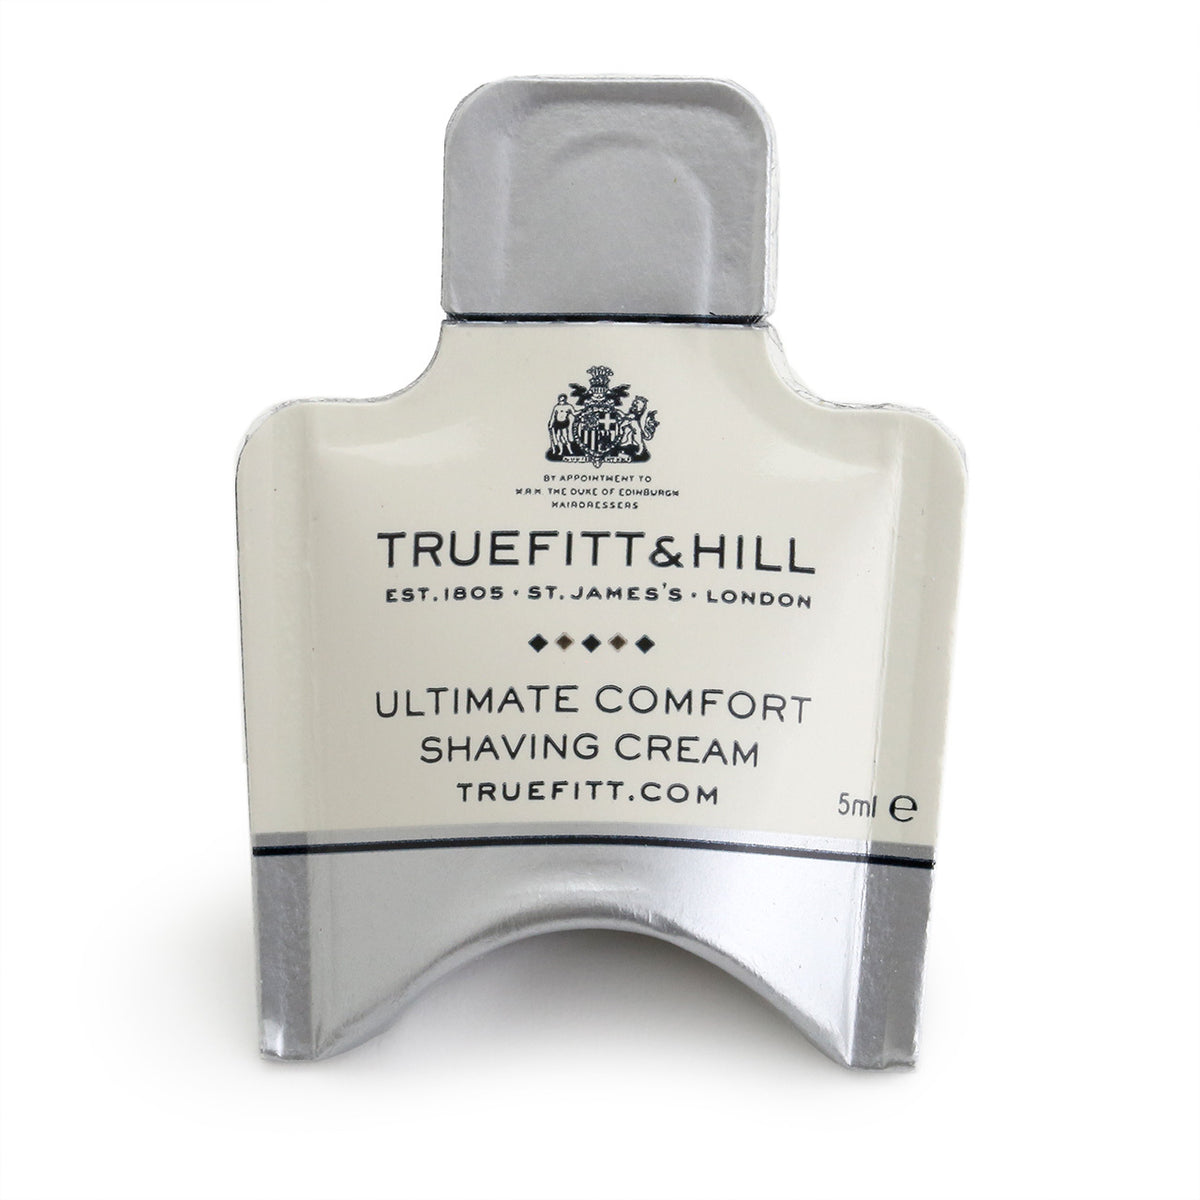 Truefitt &amp; Hill Shaving Cream Sample 5ml, Ultimate Comfort